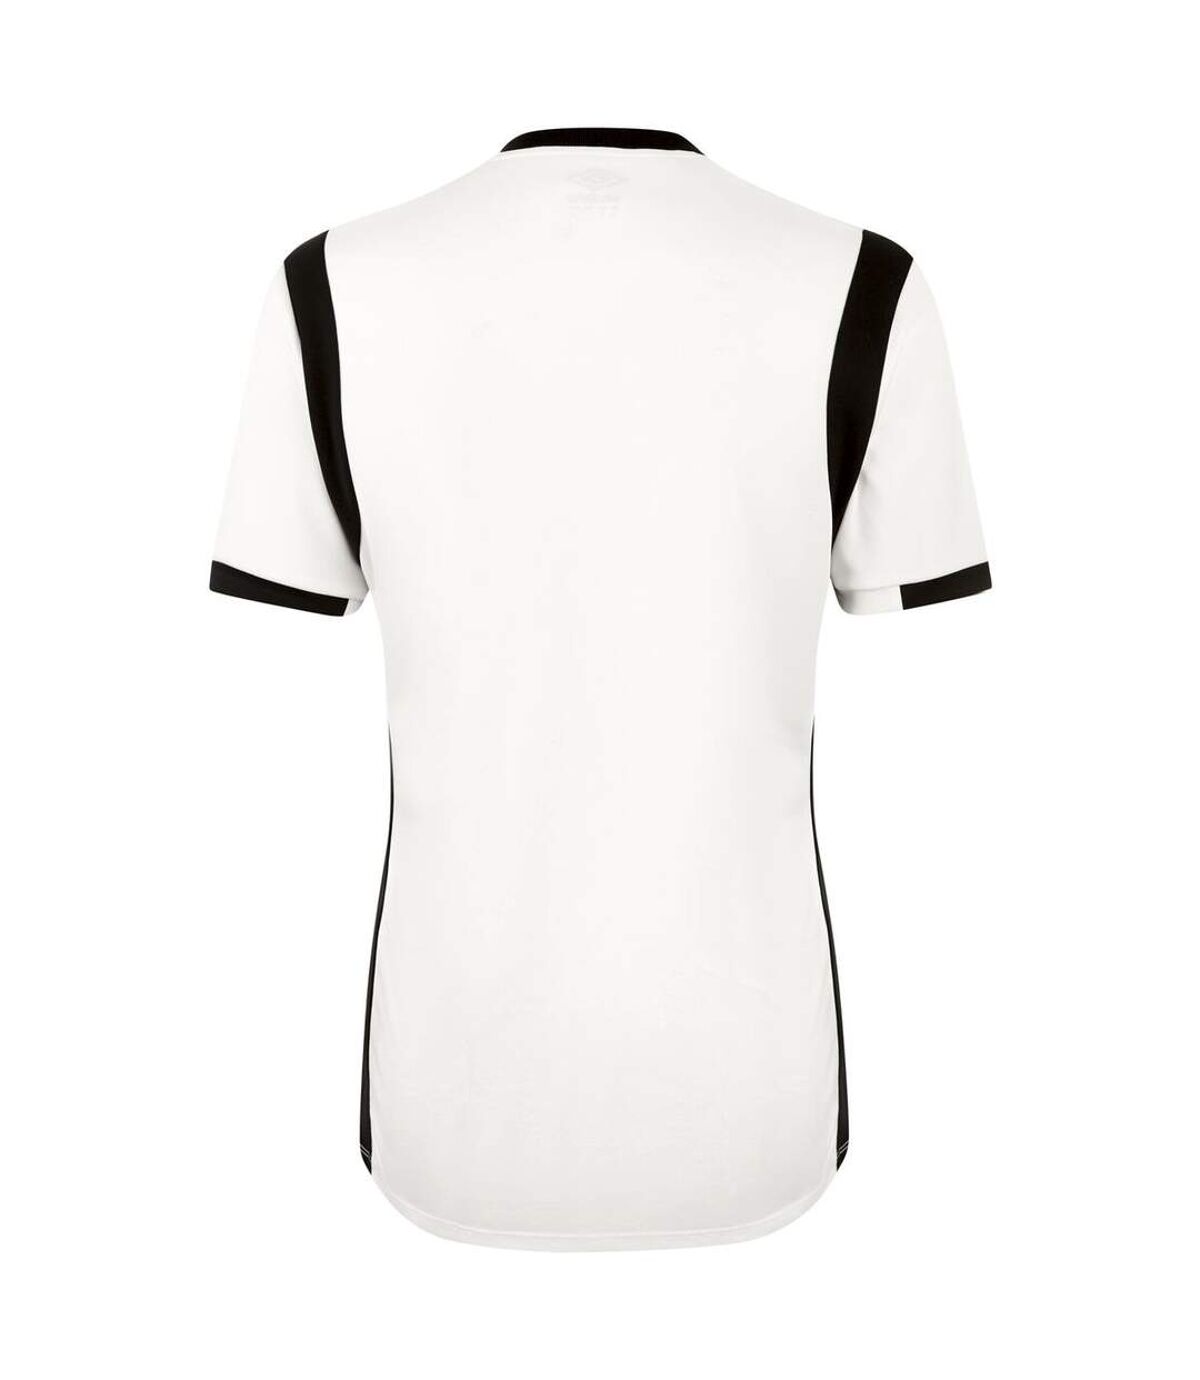 Umbro Mens Spartan Short-Sleeved Jersey (White/Black)